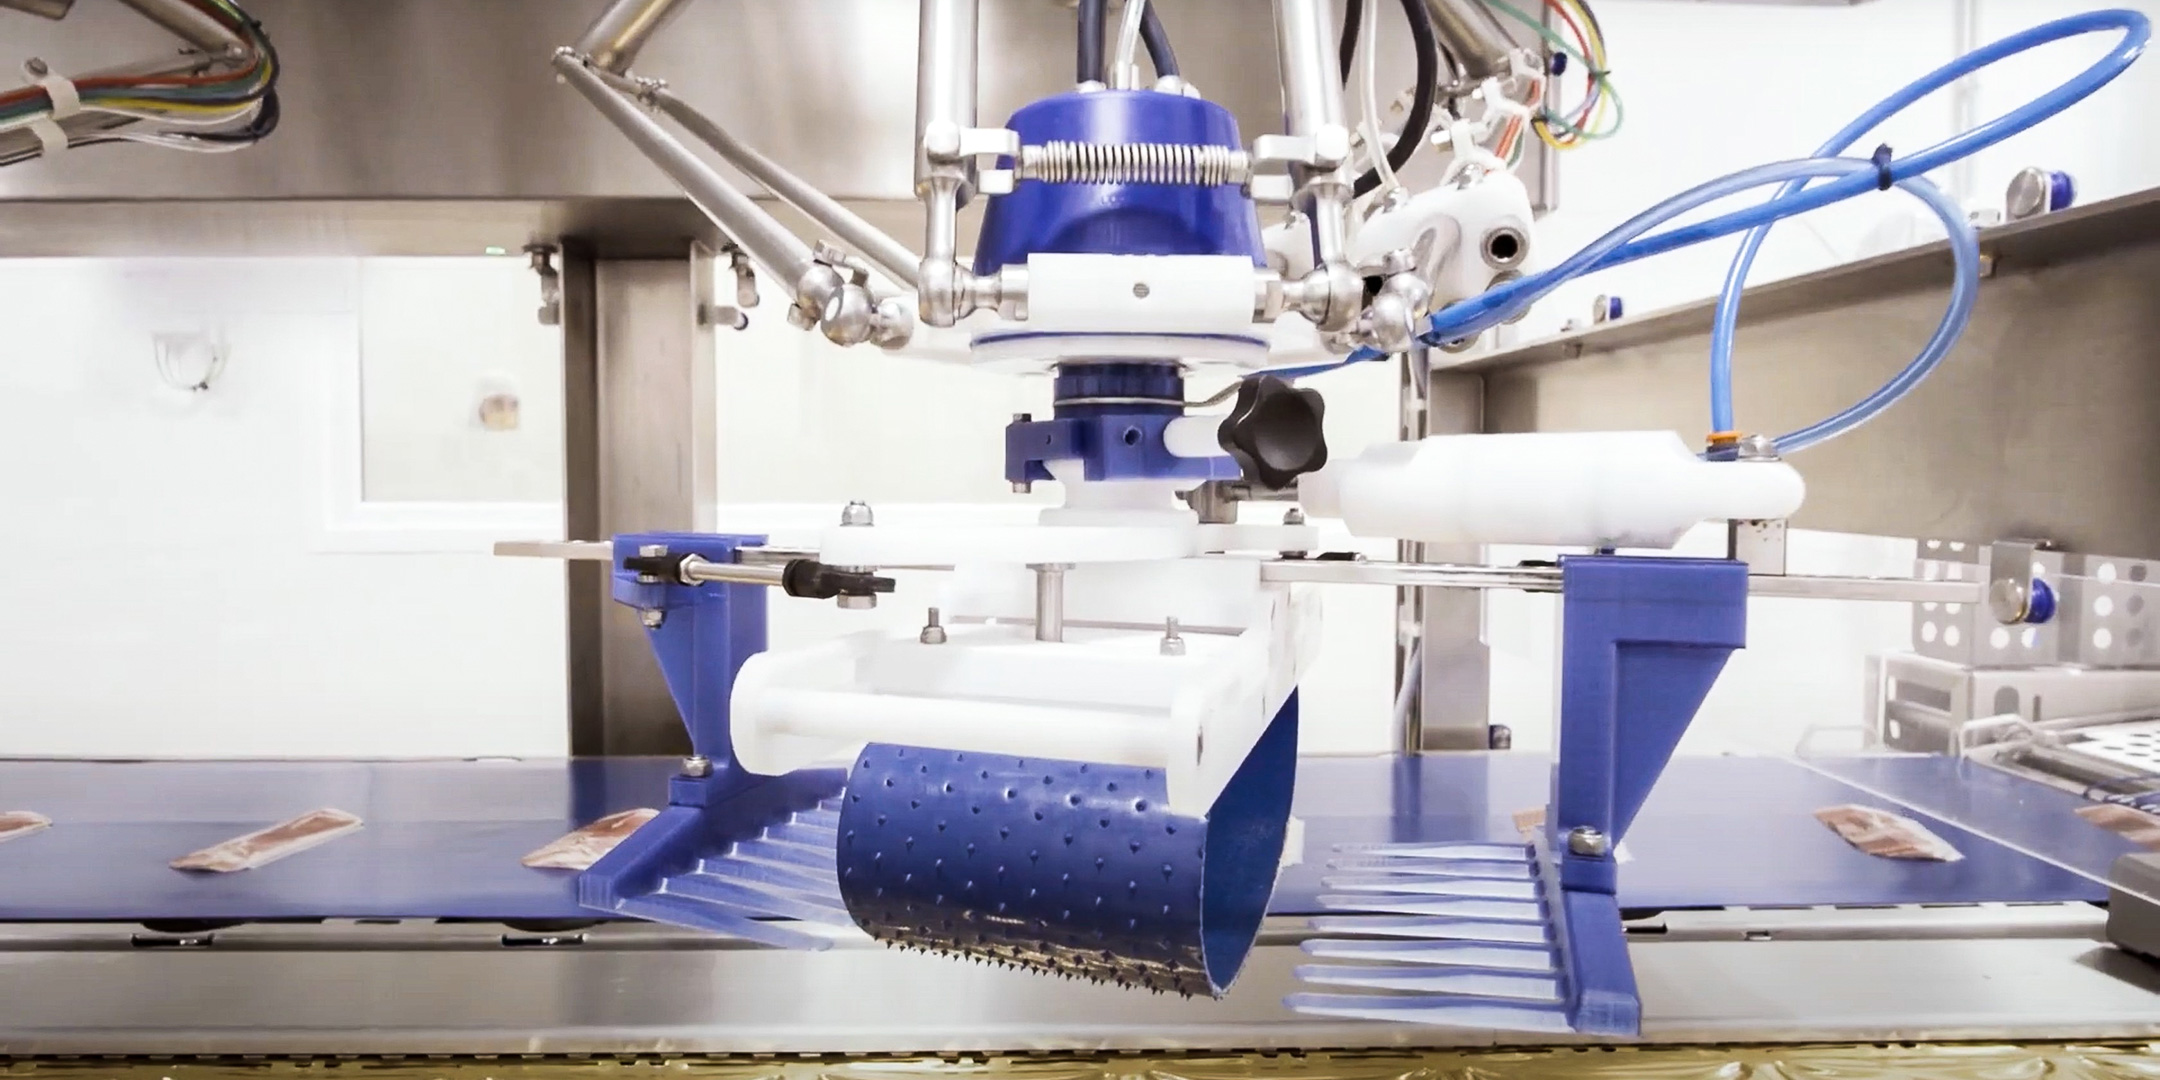 Picker combs on robot arms 3D printed using Kimya's food-safe PETG-S filament